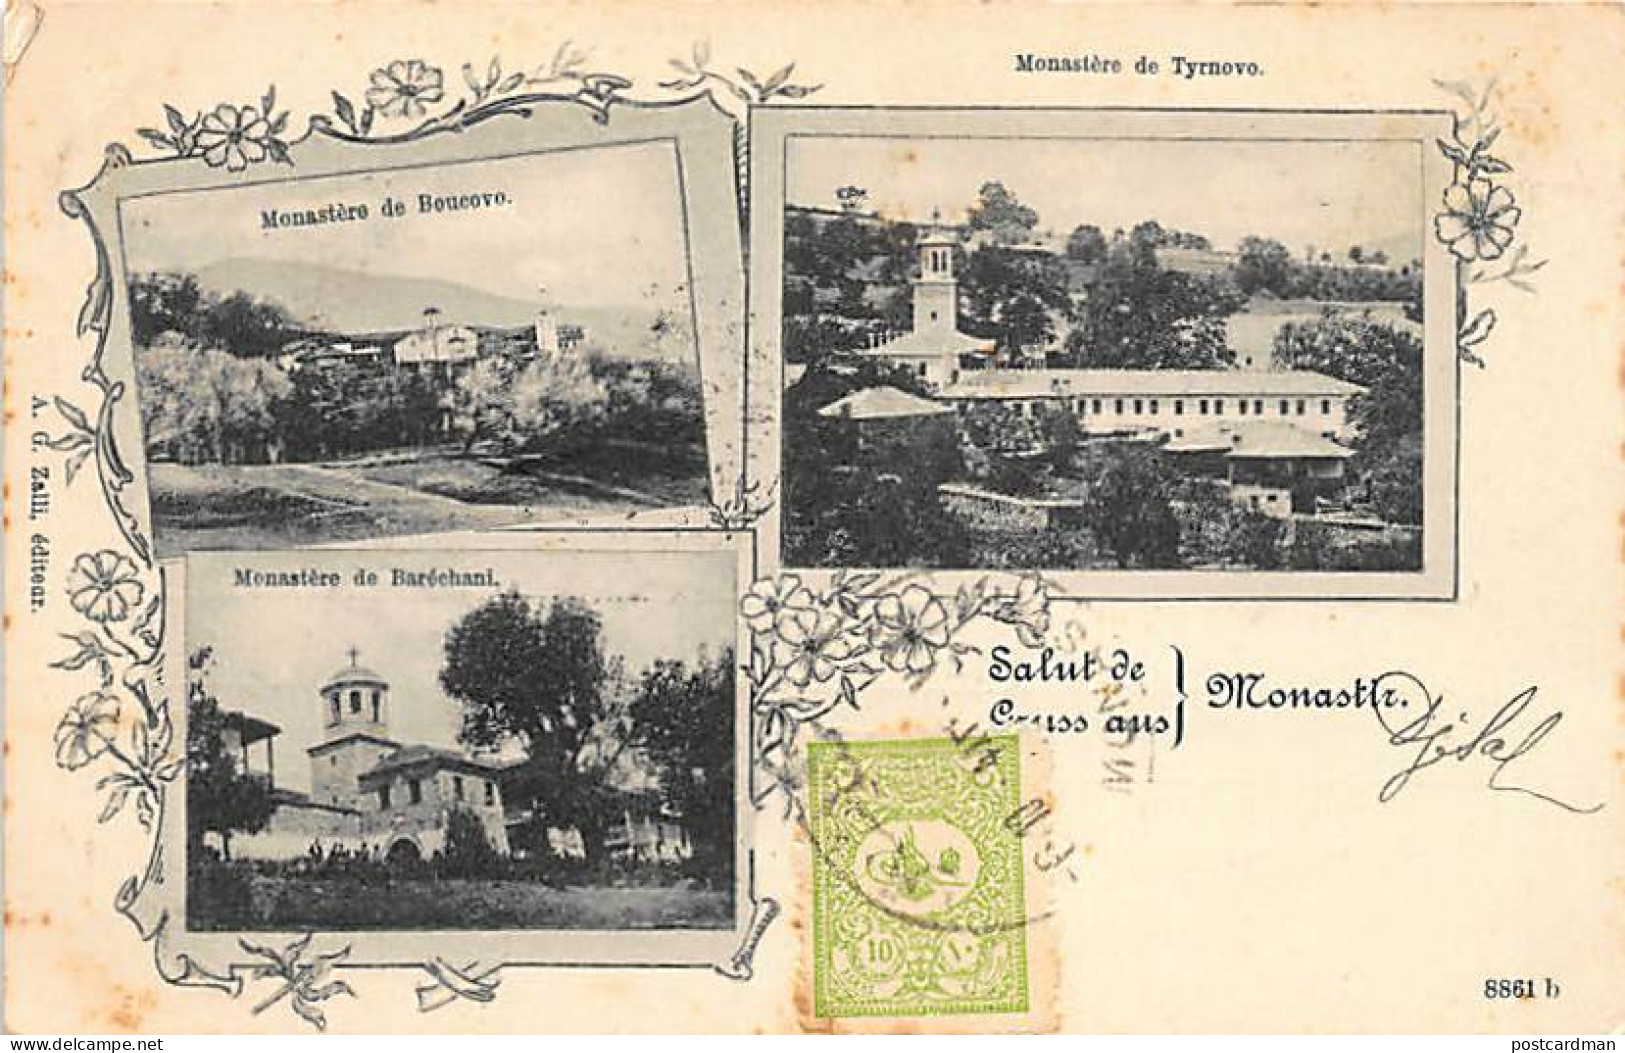 Macedonia - Gruss Aus Monastir - Bukovo Monastery - Baresani Monastery - Tirnovo Monastery - SEE STAMPS AND POSTMARKS -  - Macedonia Del Nord